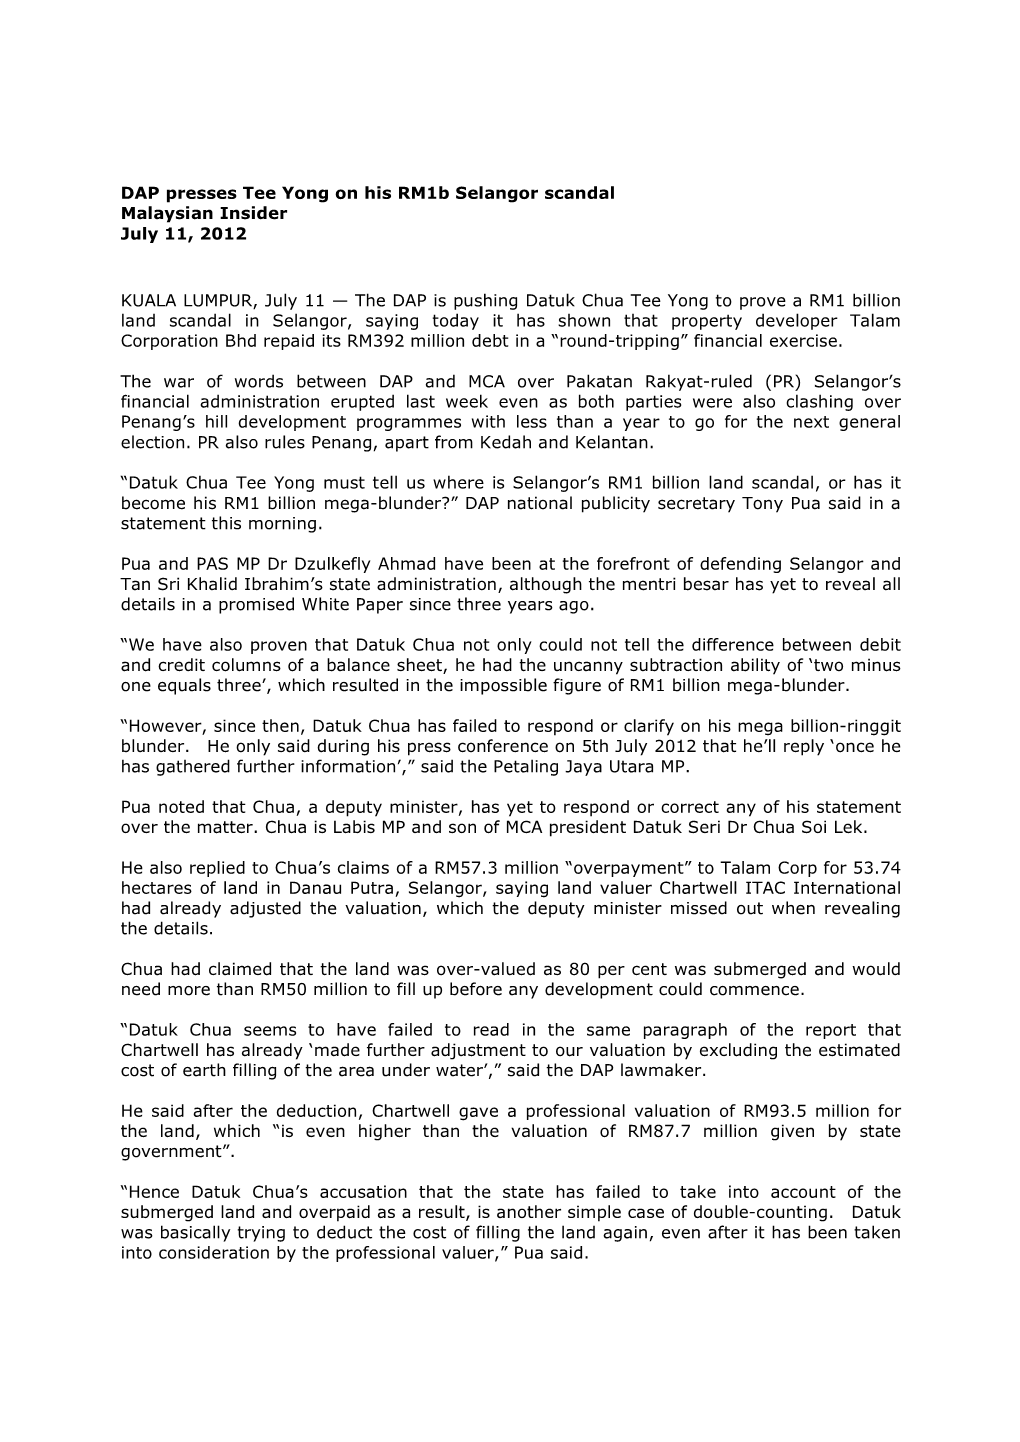 DAP Presses Tee Yong on His Rm1b Selangor Scandal Malaysian Insider July 11, 2012